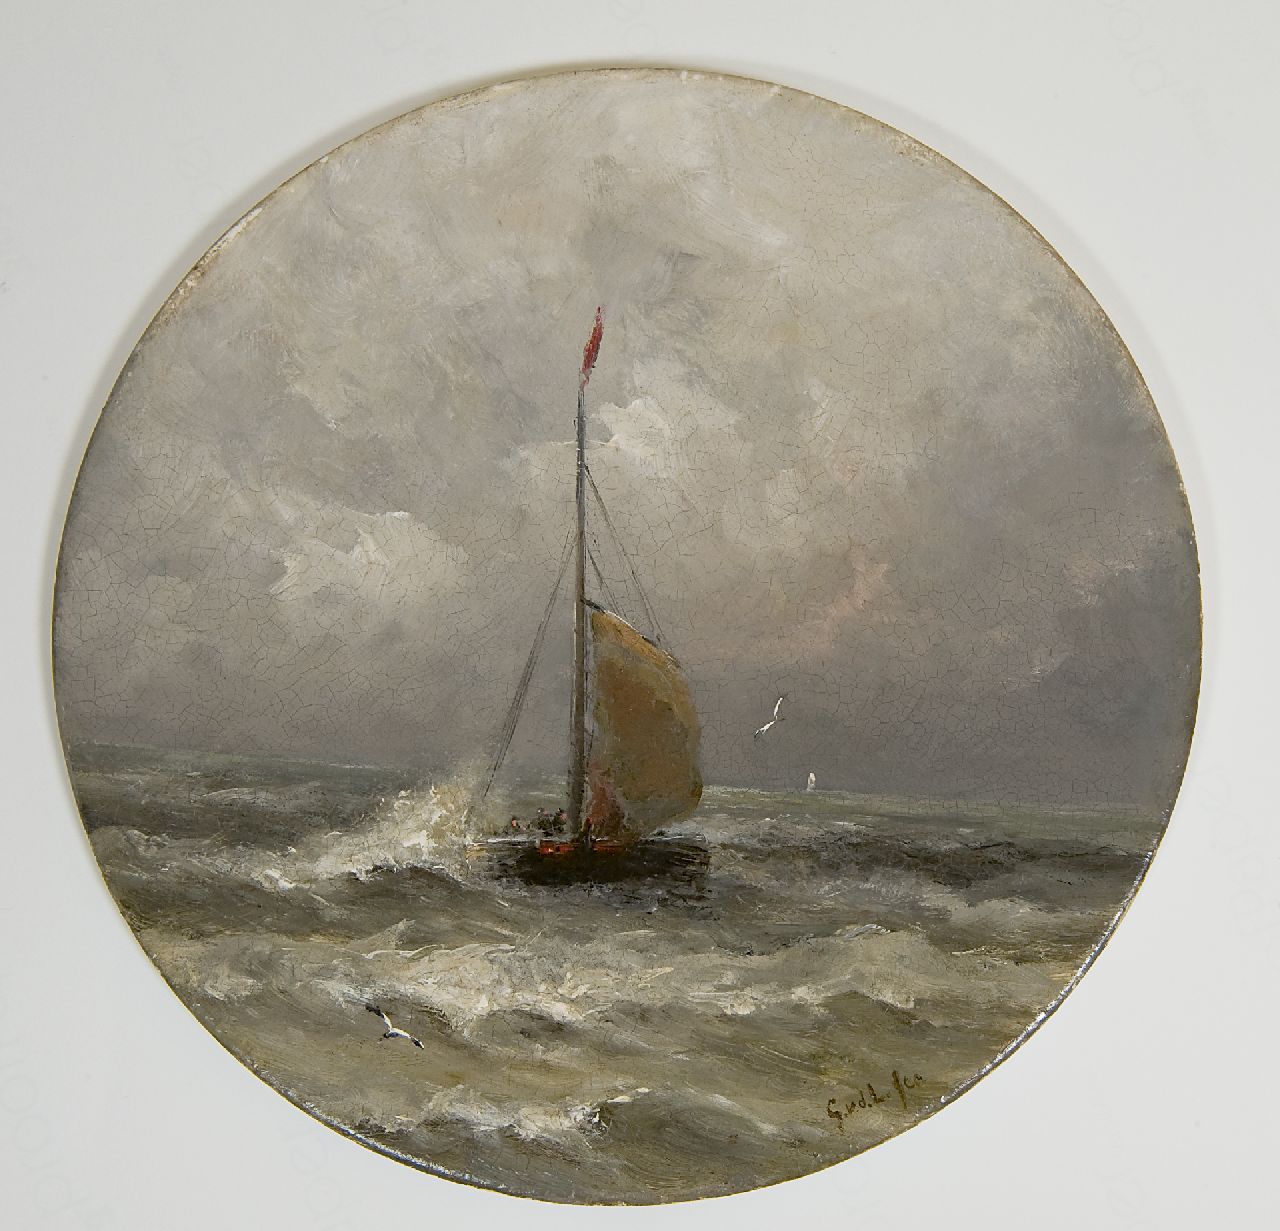 Laan G. van der | Gerard van der Laan, Fishing boat at sea, oil on china 28.3 x 28.3 cm, signed with initials l.r.